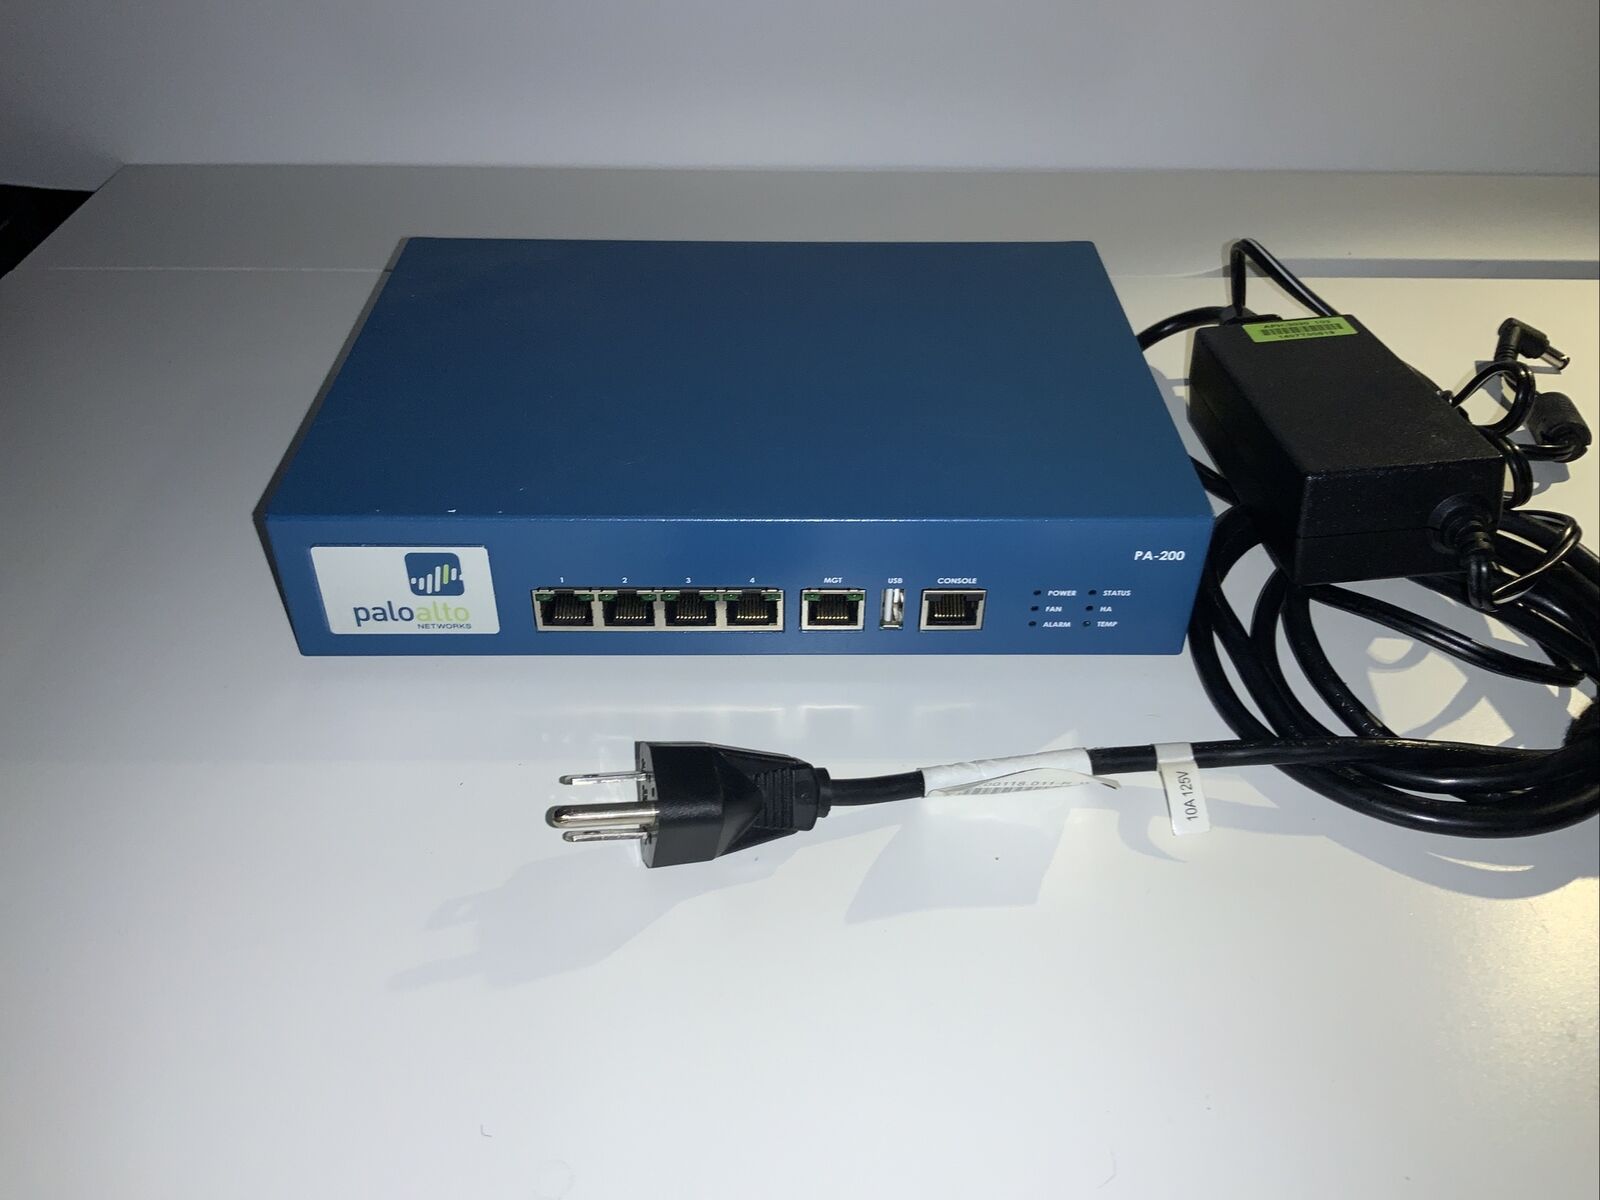 Palo Alto PA-200 Network Security Appliance w/ AC Adapter